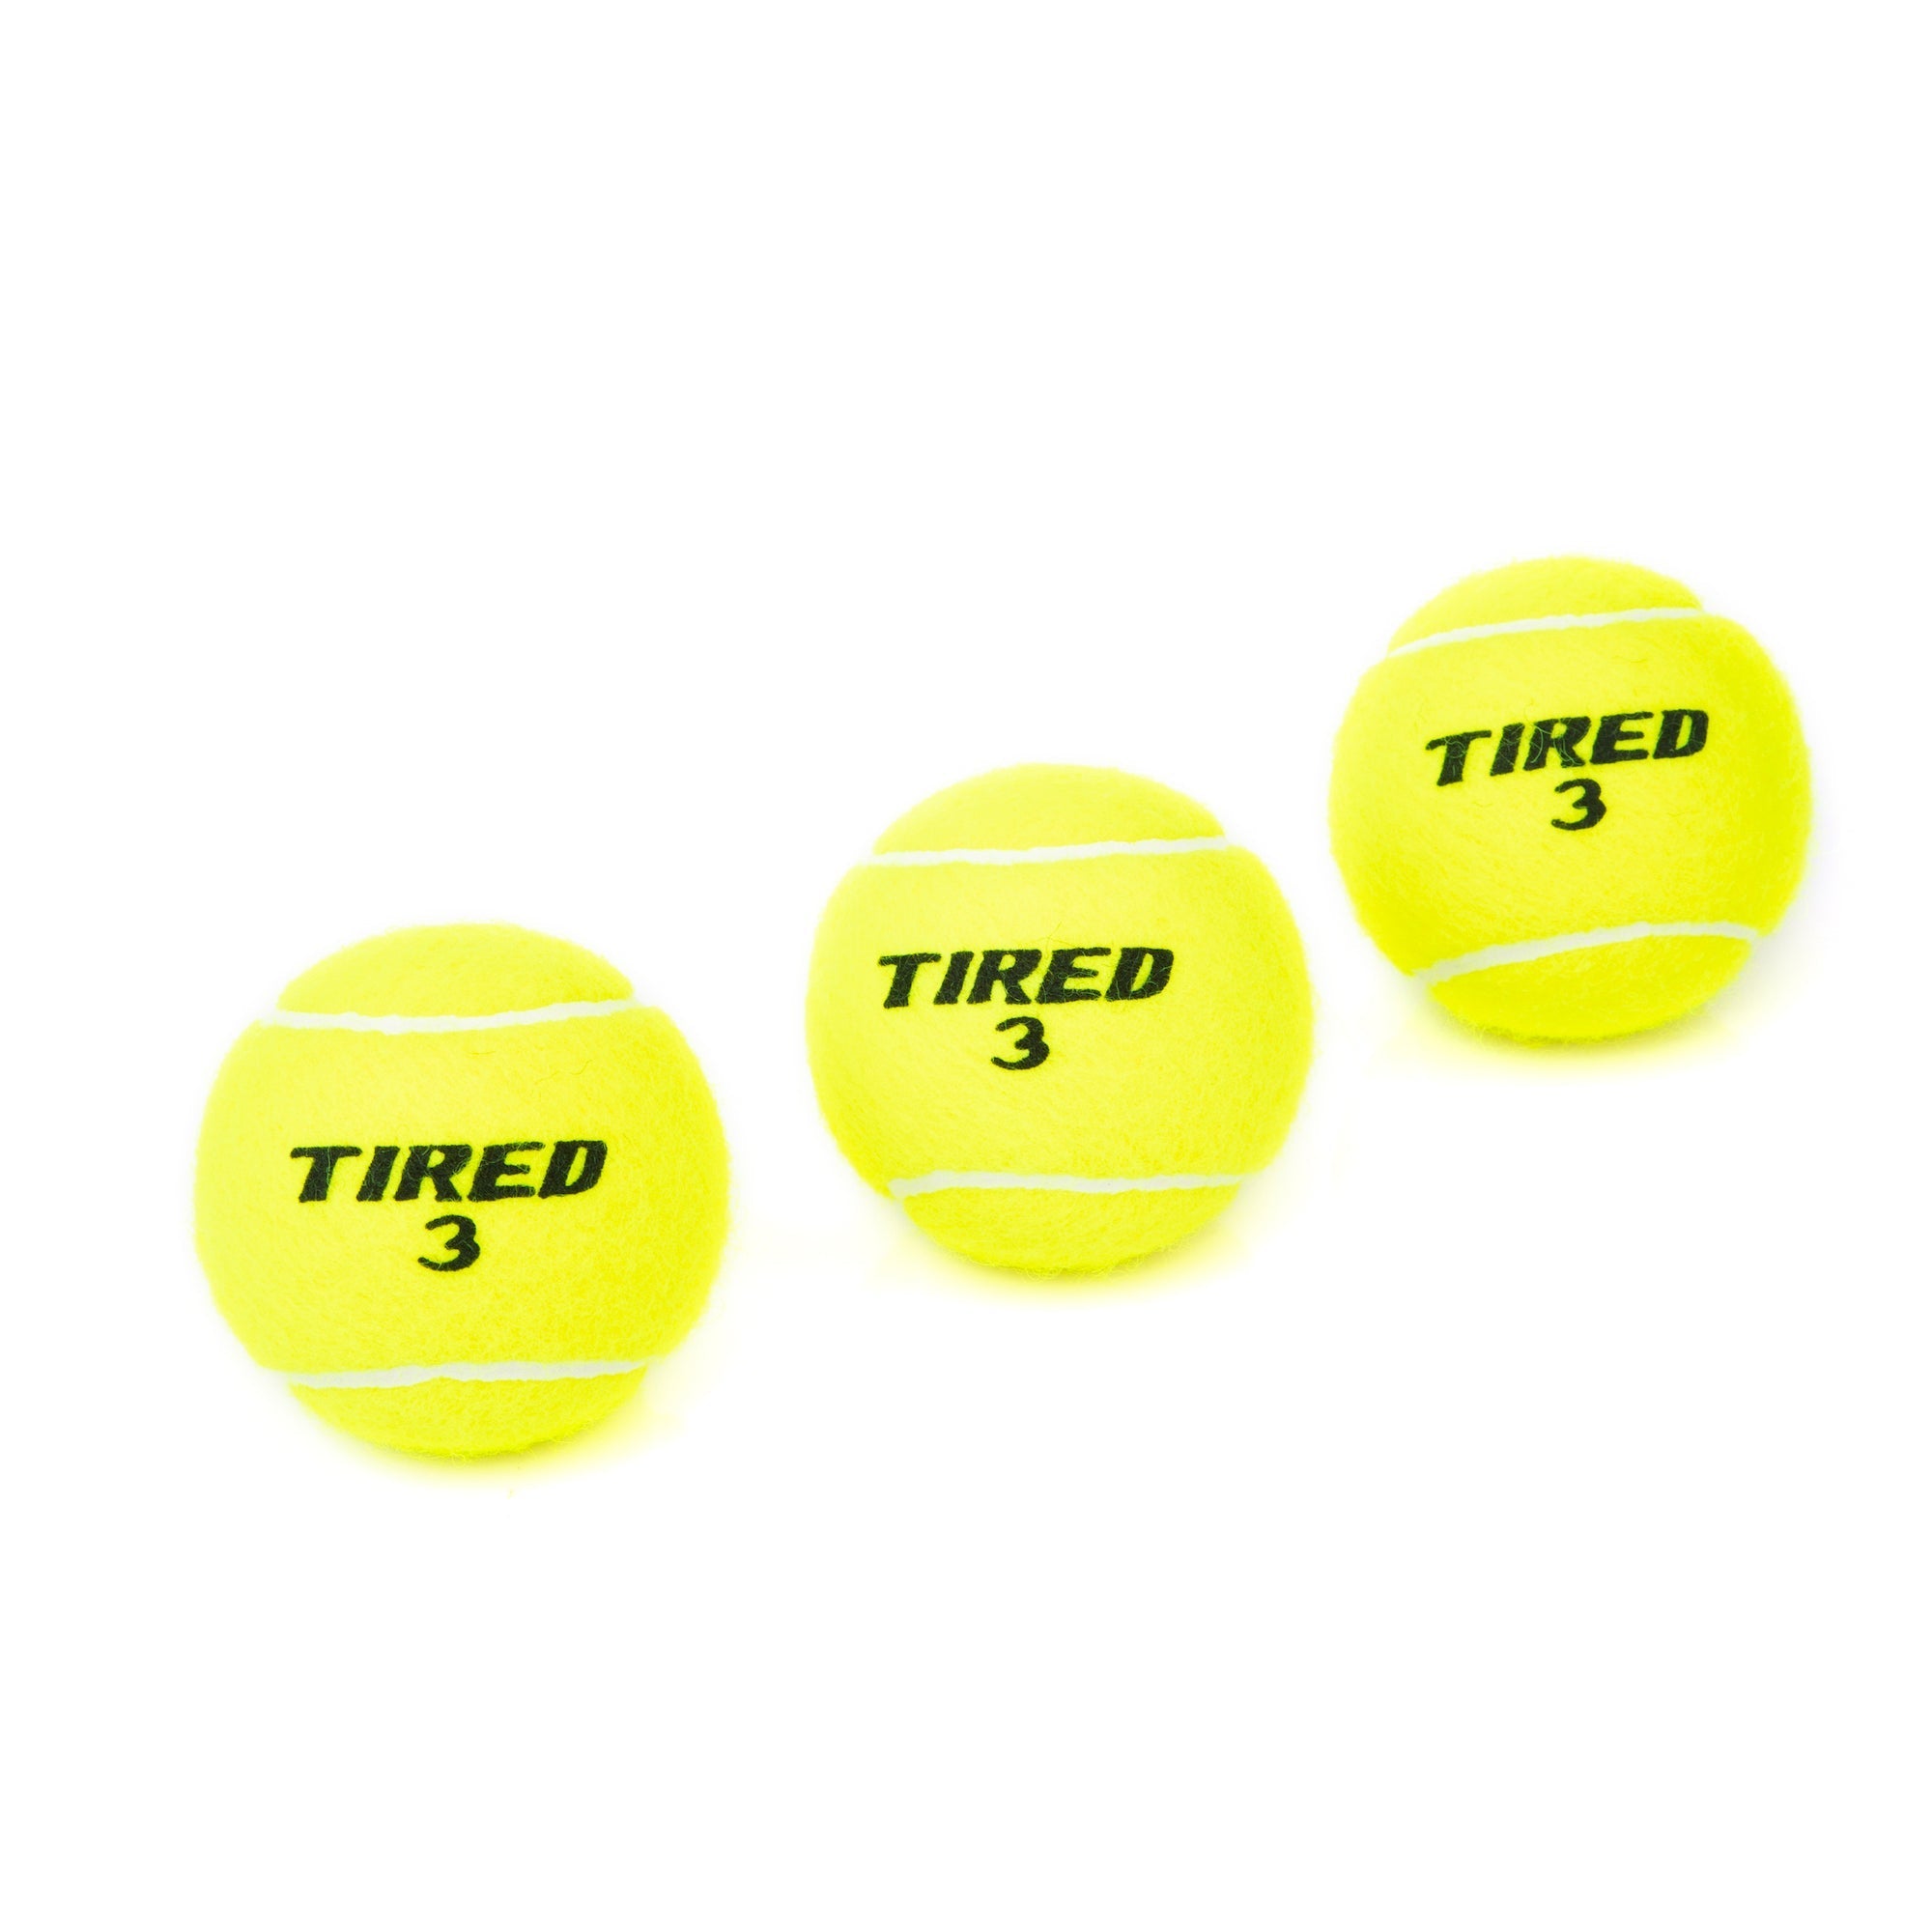 Tennis Canister (3 Balls)